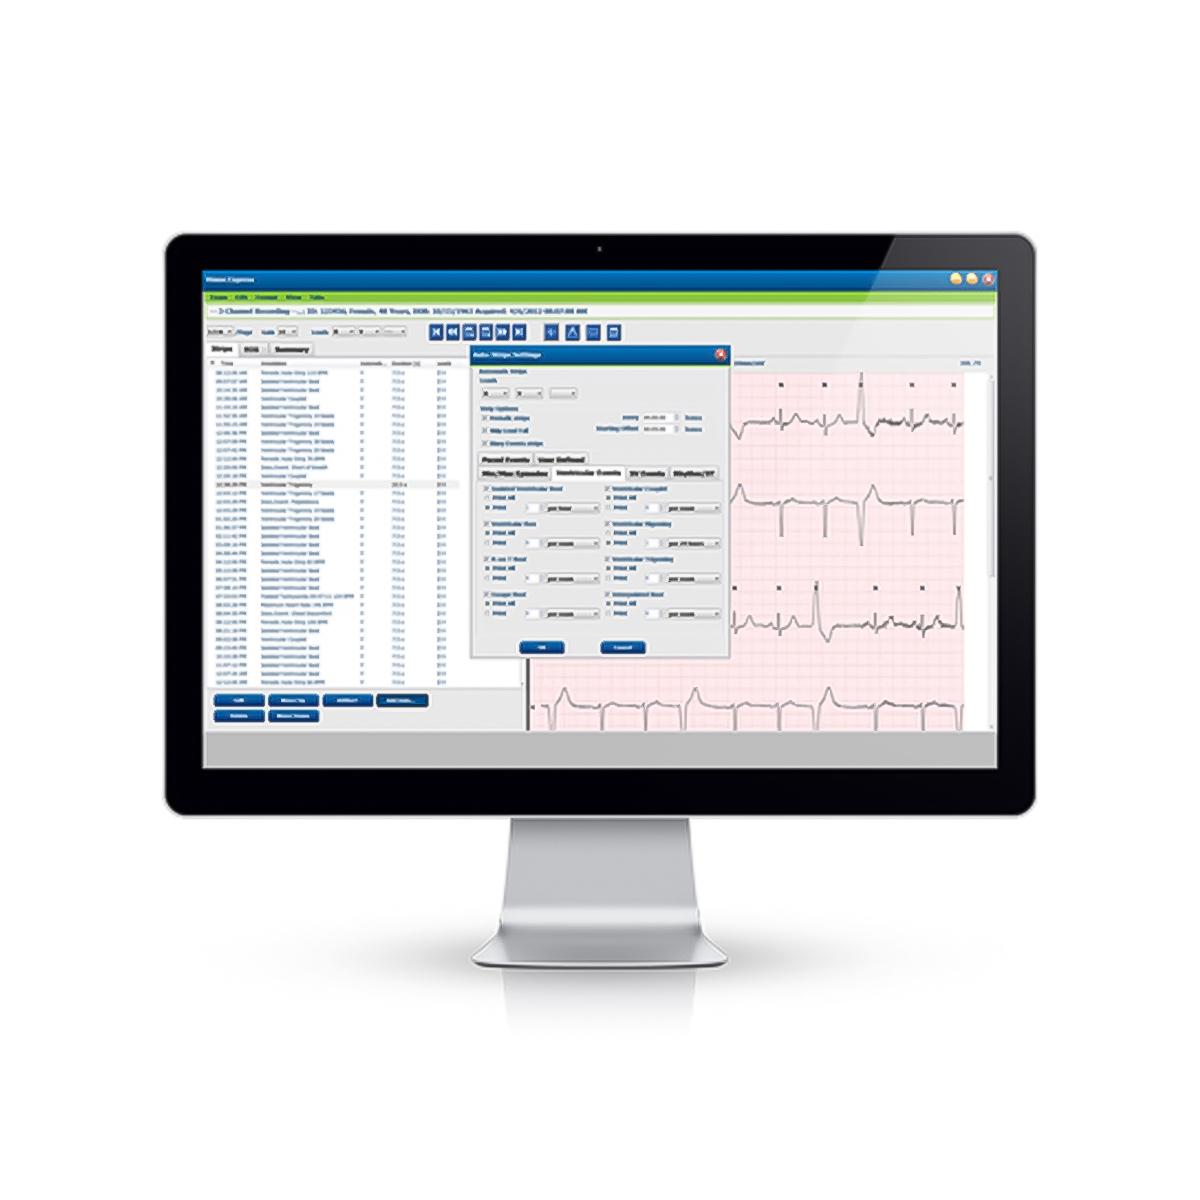 Vision™ Express Holter Analysis System displayed on desktop monitor